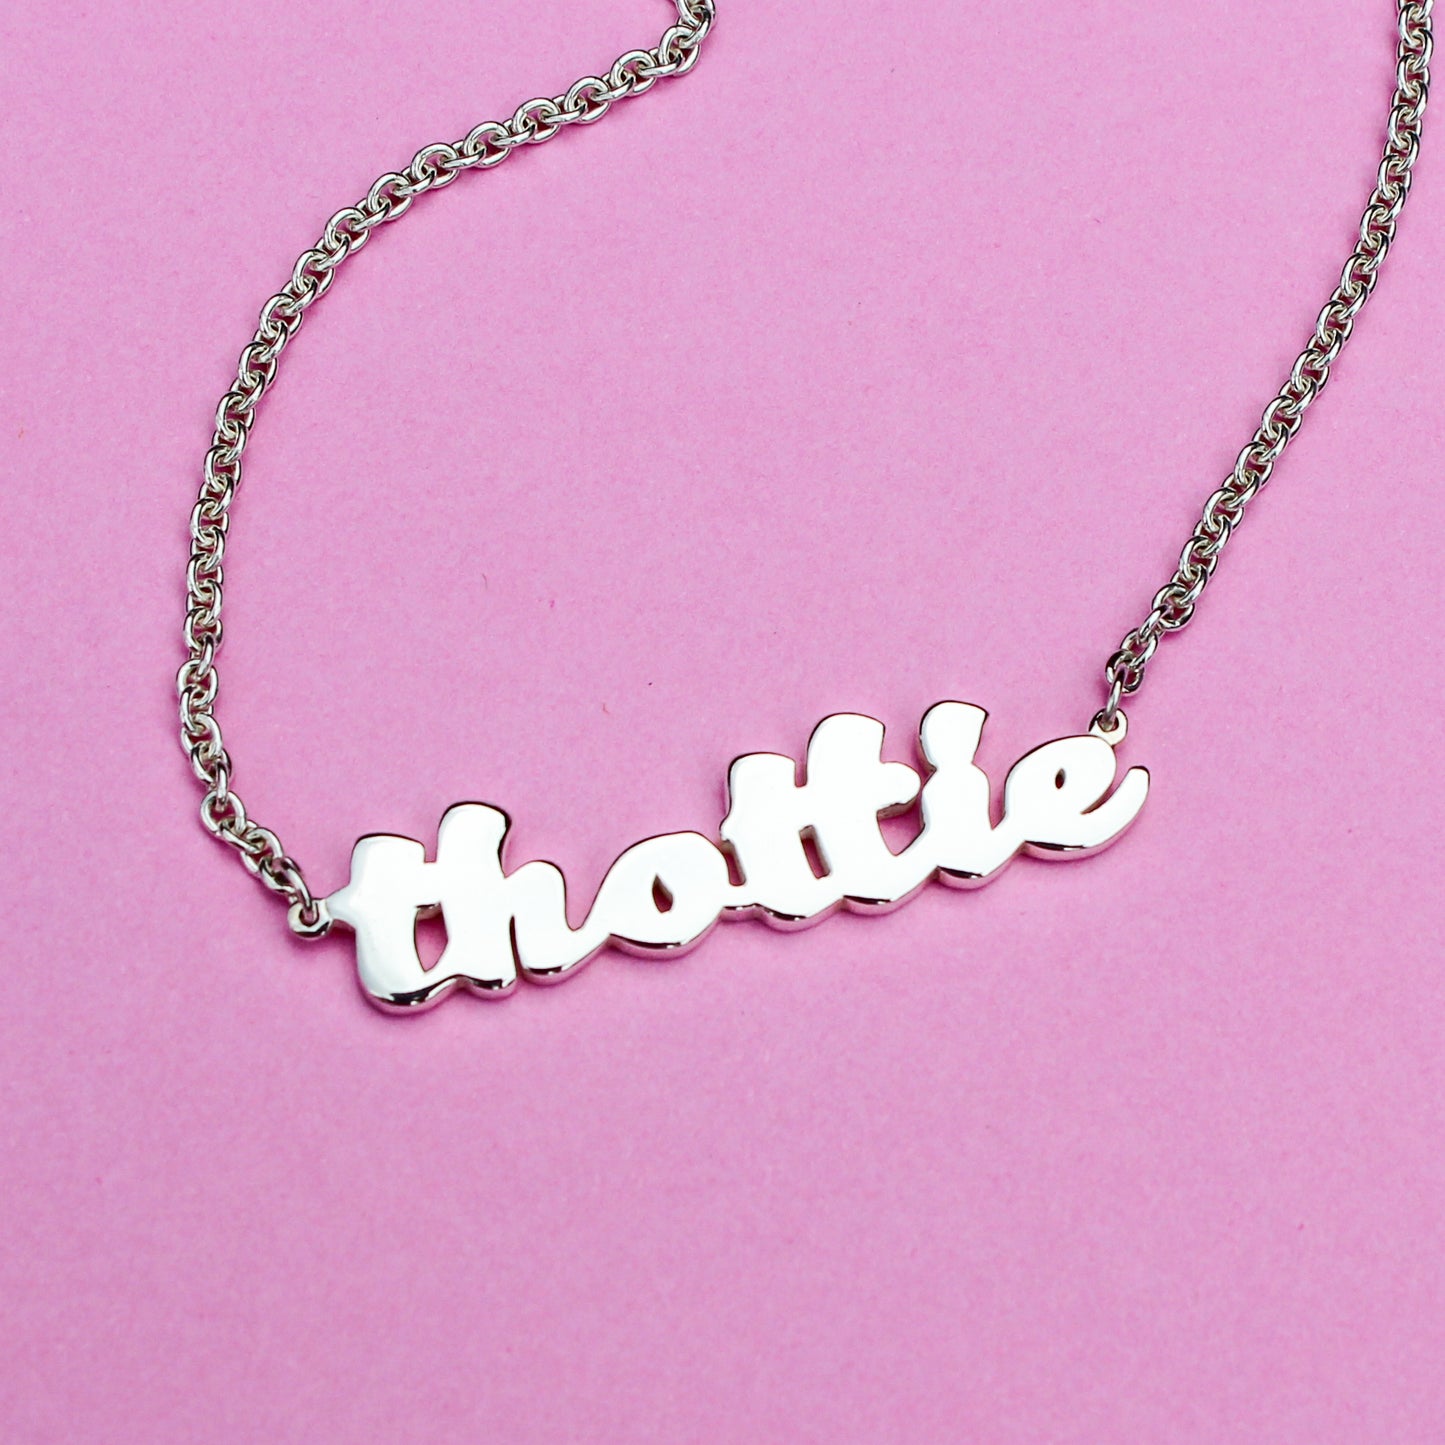 [sᴀᴍᴘʟᴇ sᴀʟᴇ] thottie necklace